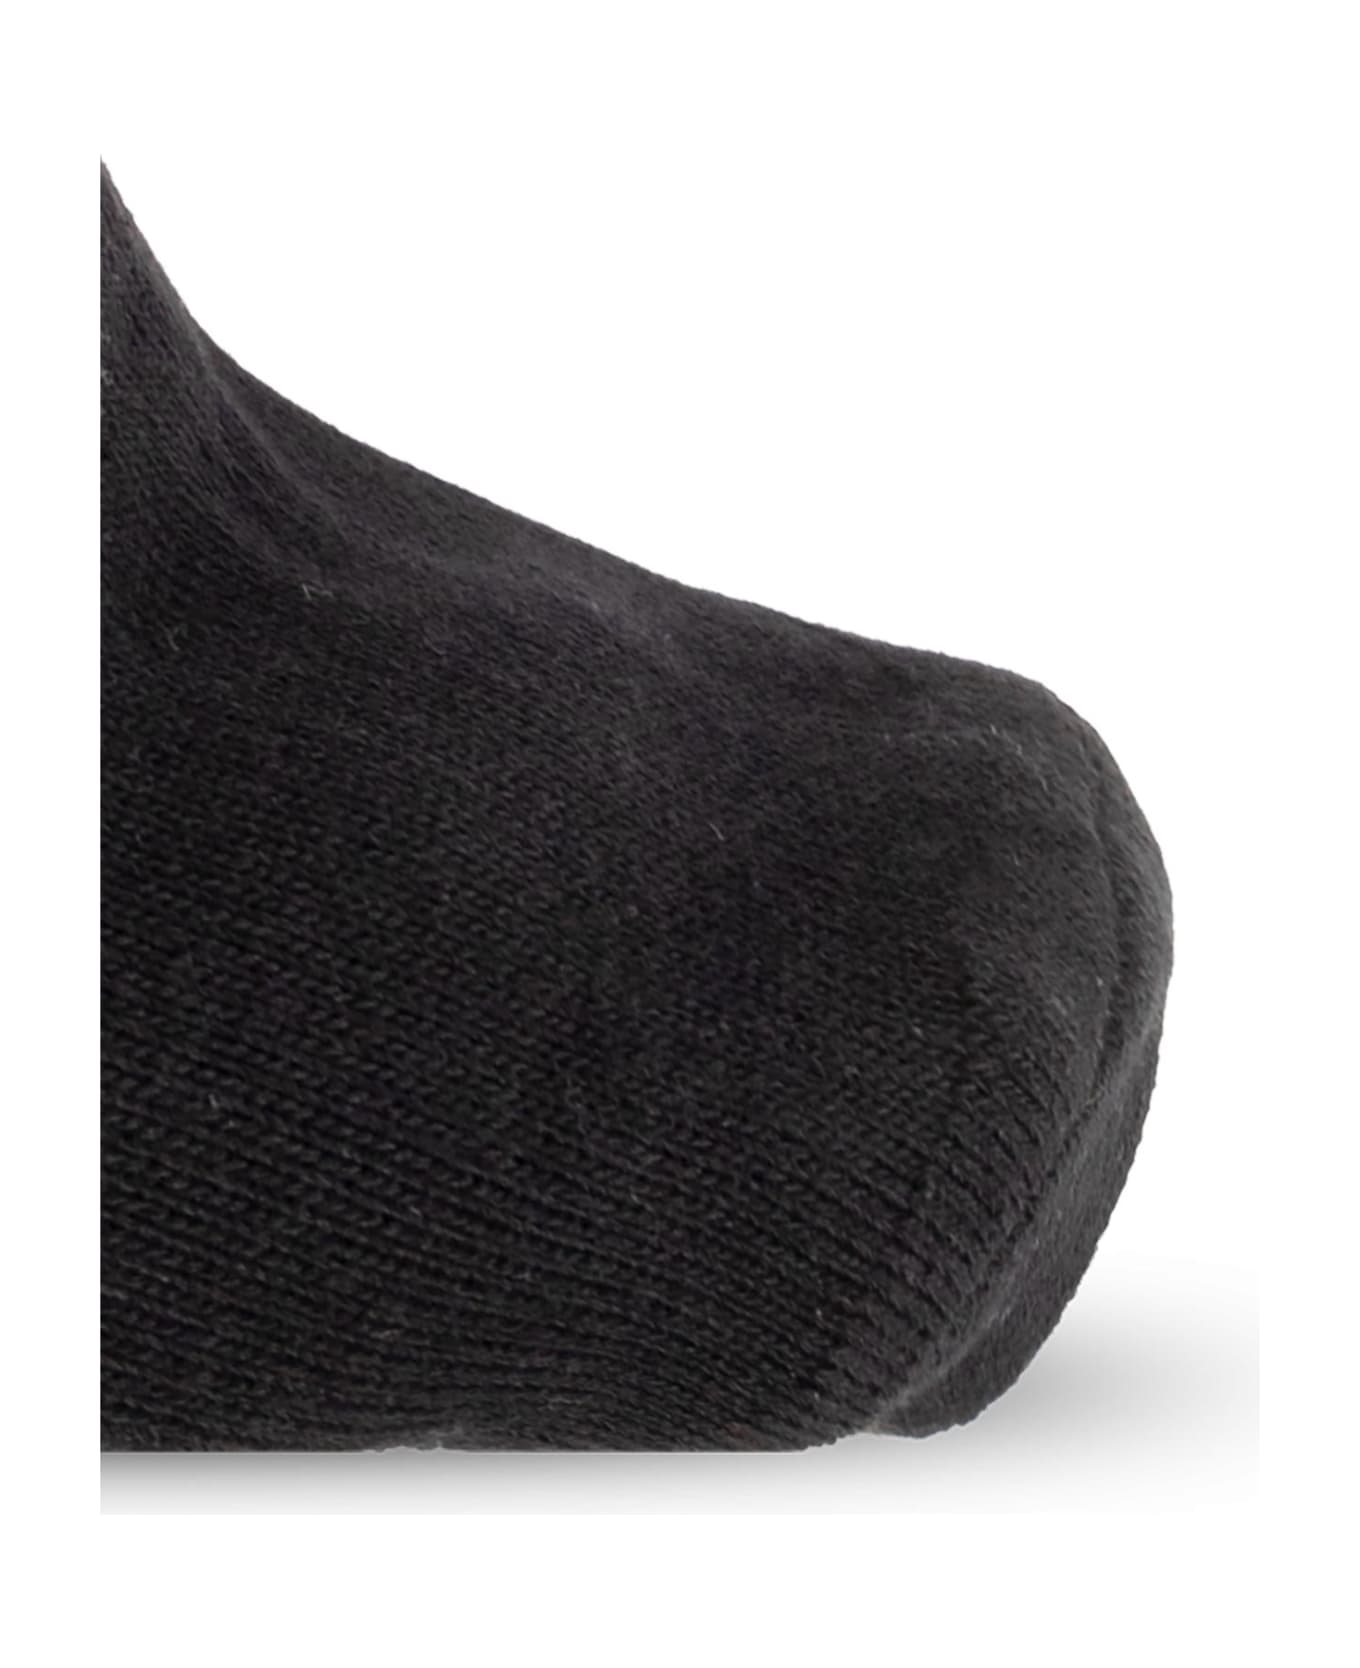 Rhude Socks With Logo - Black